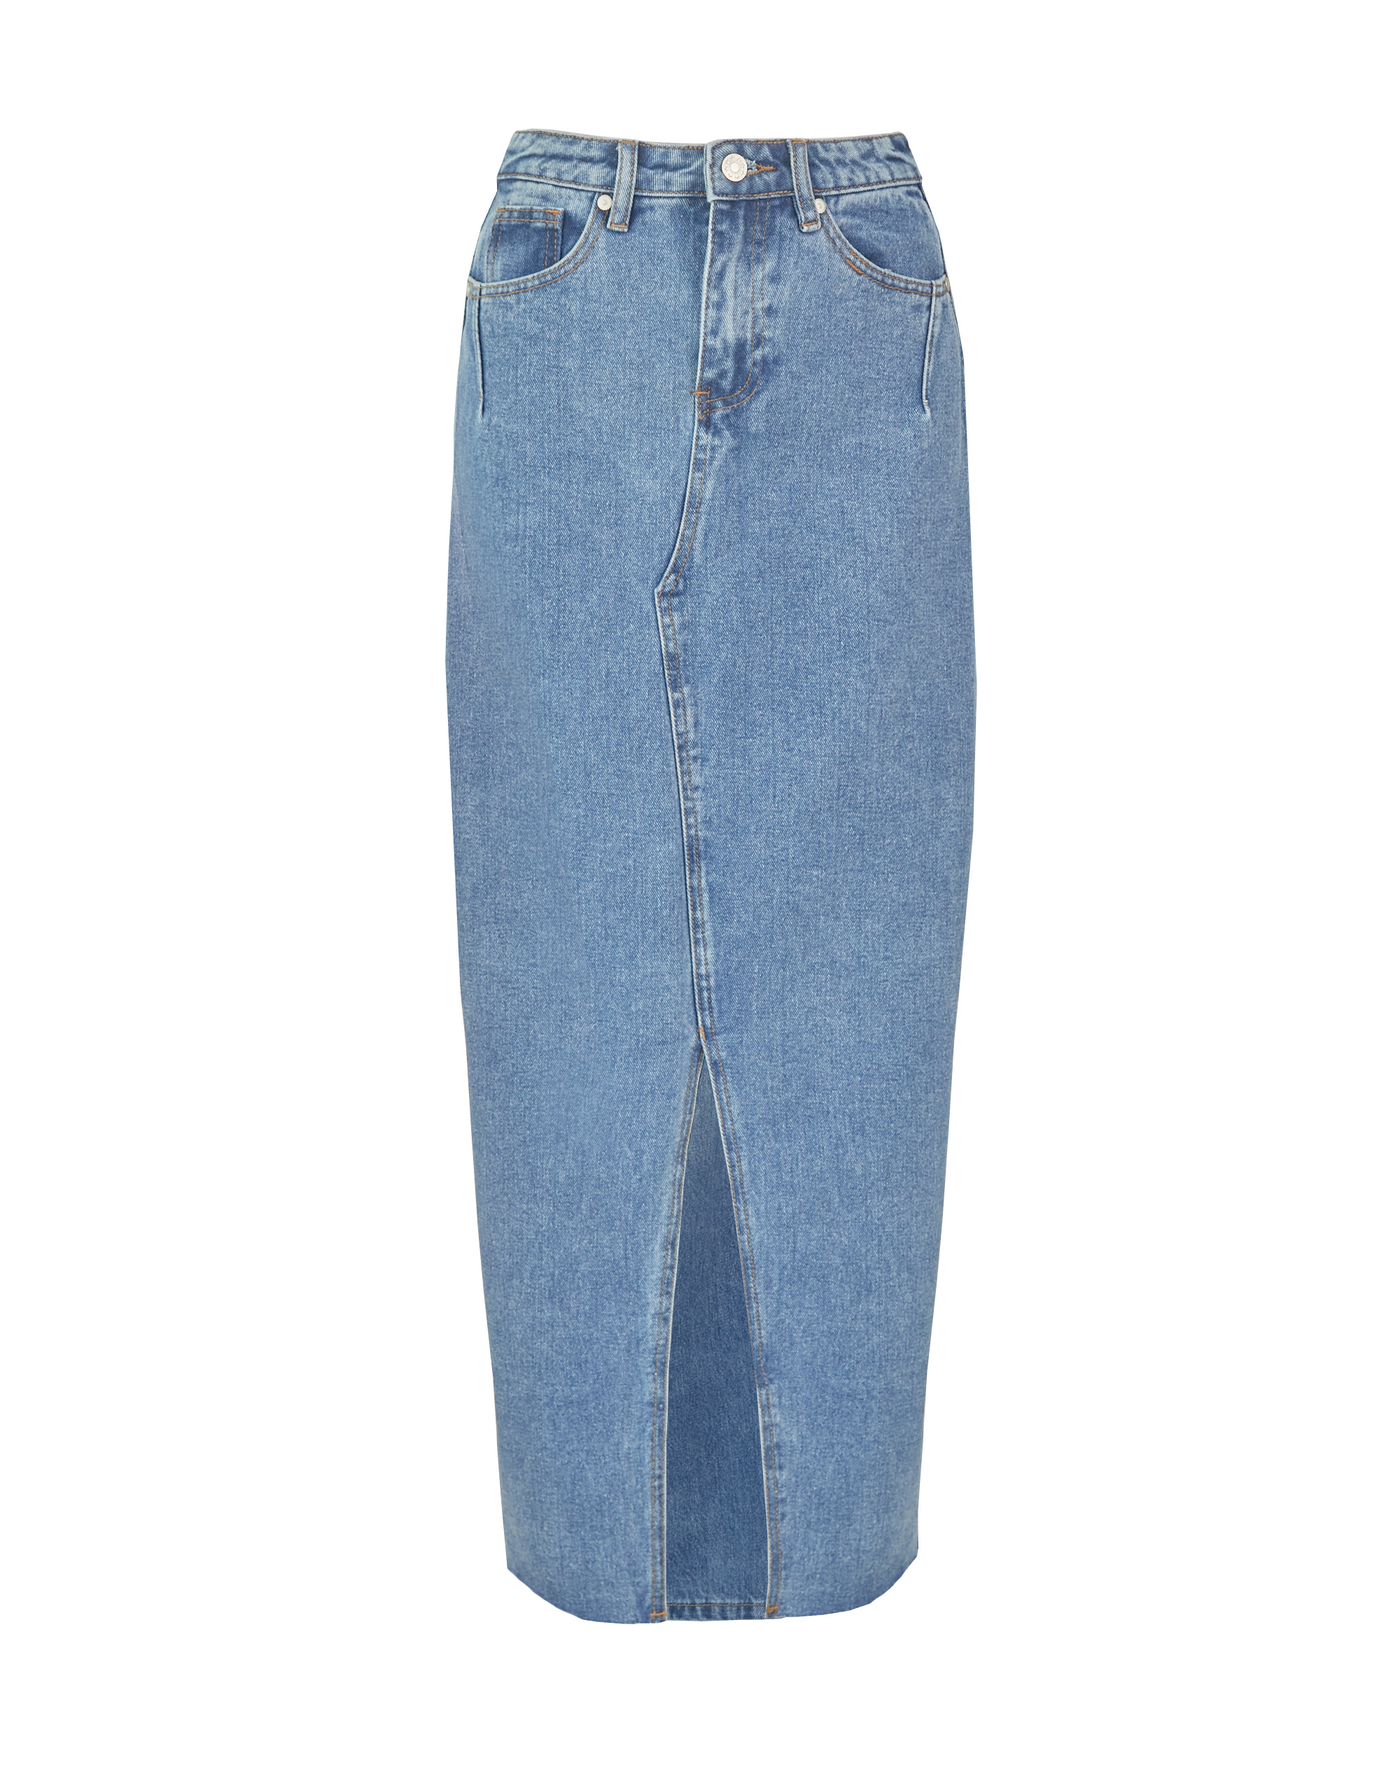 Drew Denim Midi Skirt (Mid Wash) - Mid Wash Blue Denim Midi Skirt ...